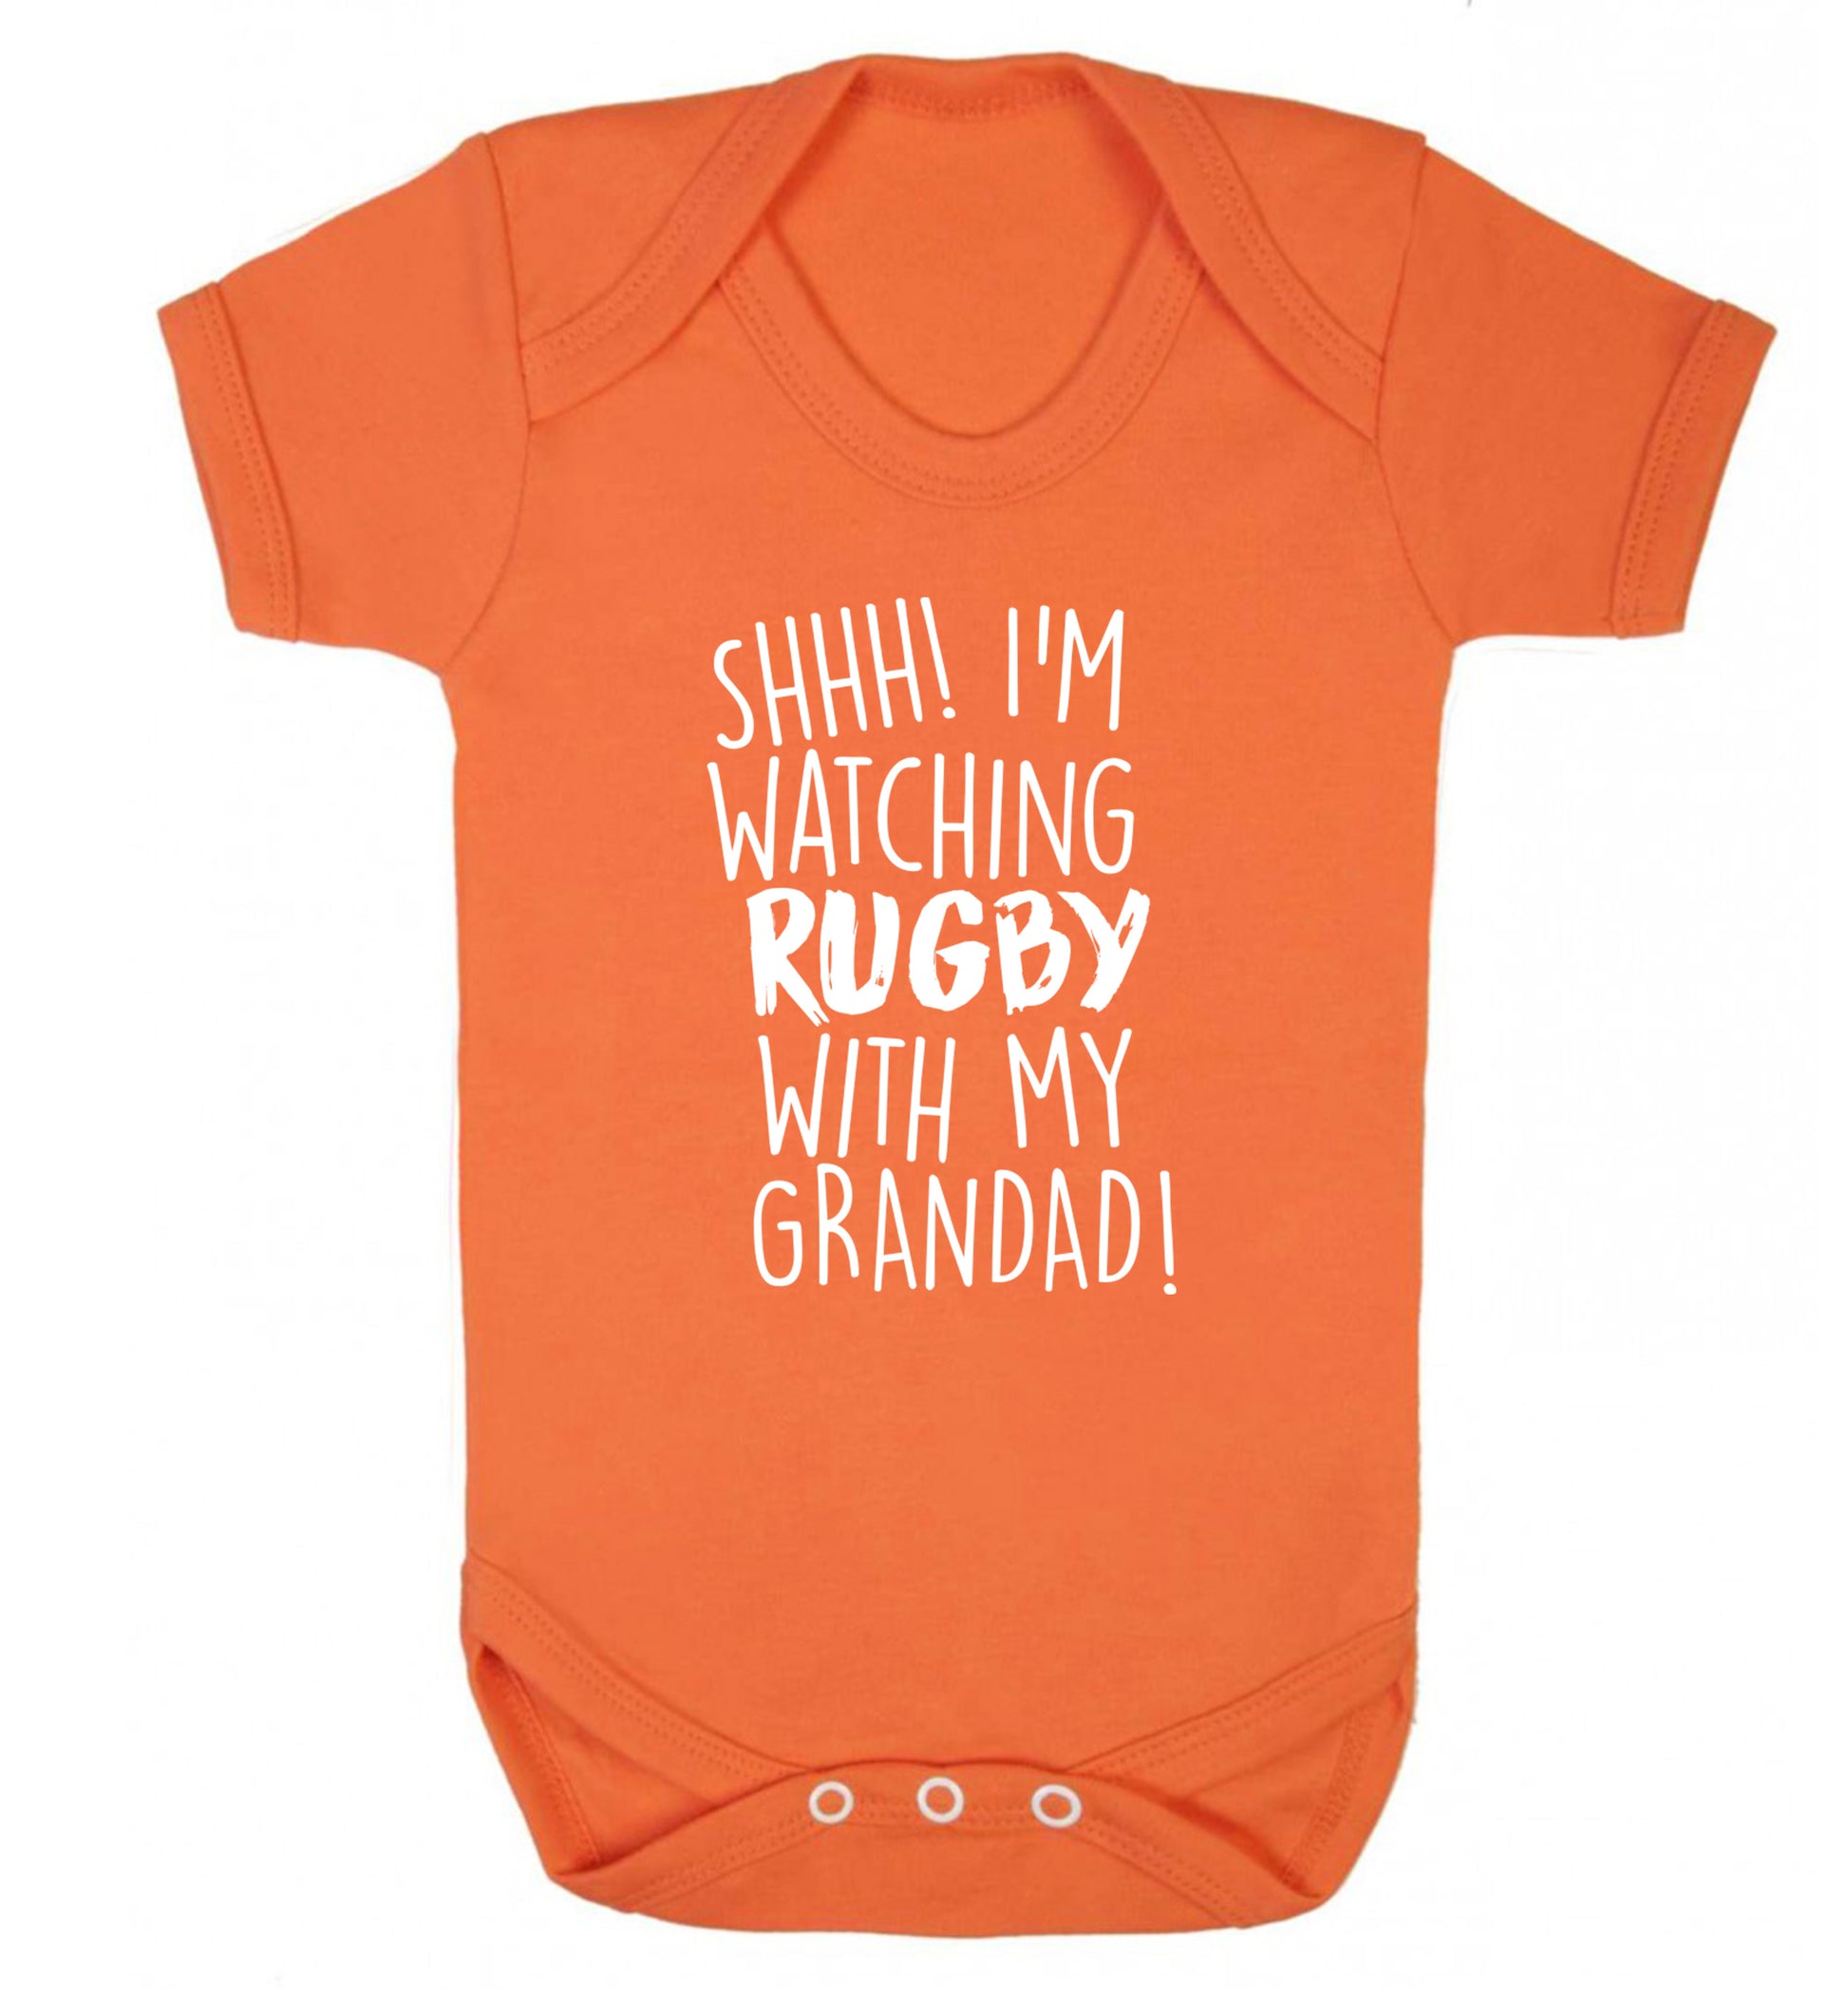 Shh I'm watching rugby with my grandad Baby Vest orange 18-24 months